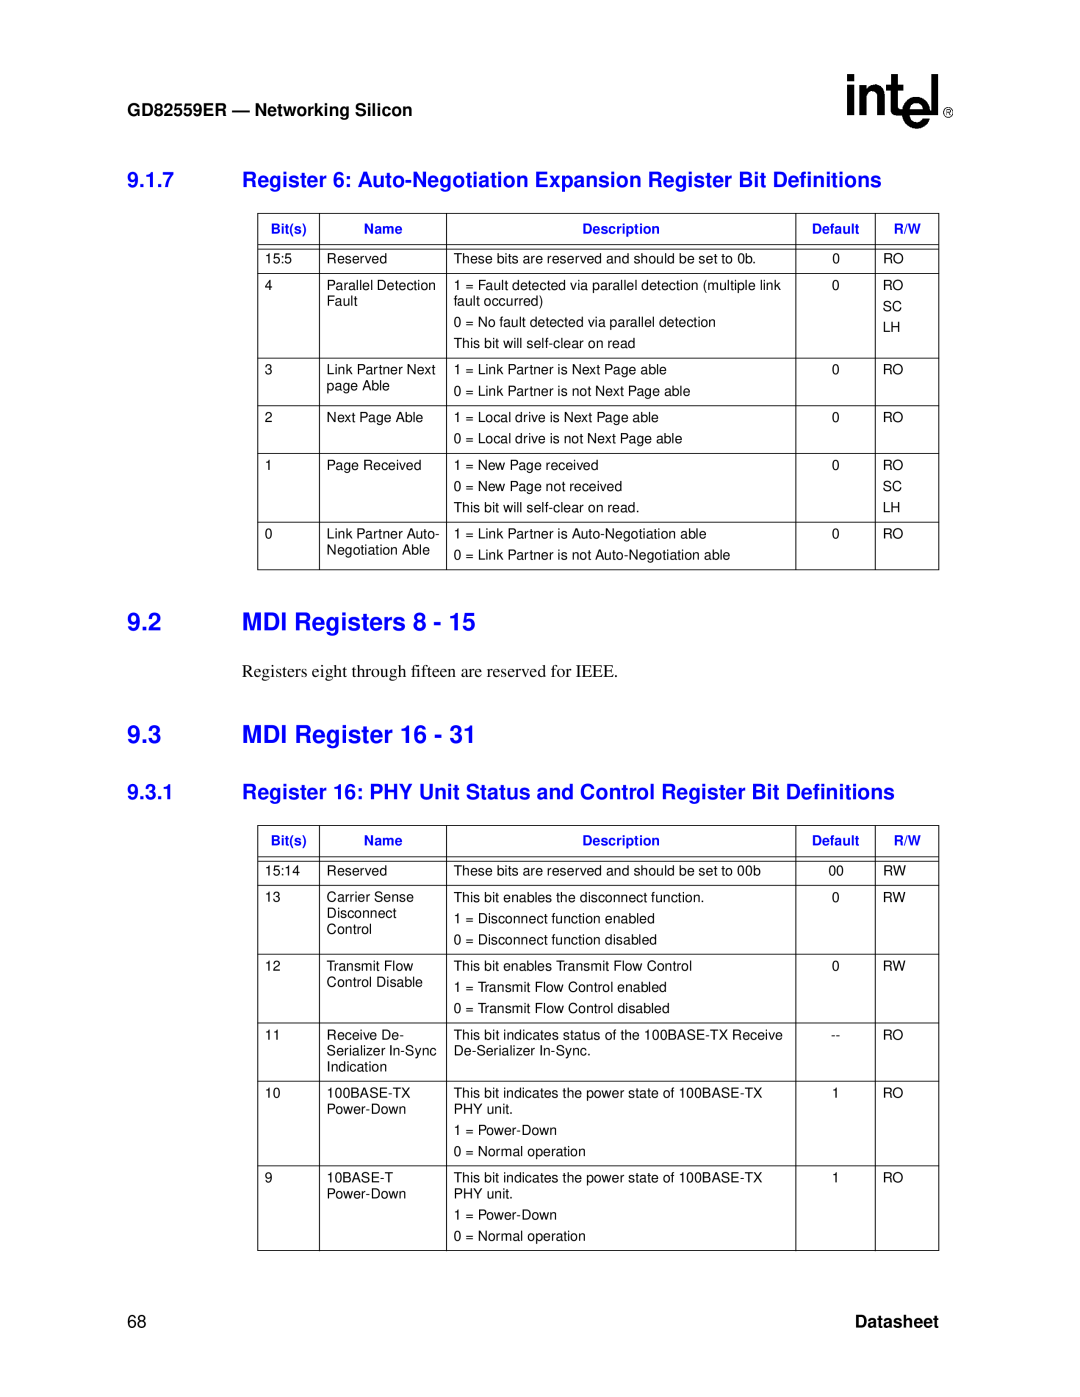 Intel GD82559ER manual MDI Registers 8, MDI Register 16, Register 6 Auto-Negotiation Expansion Register Bit Definitions 